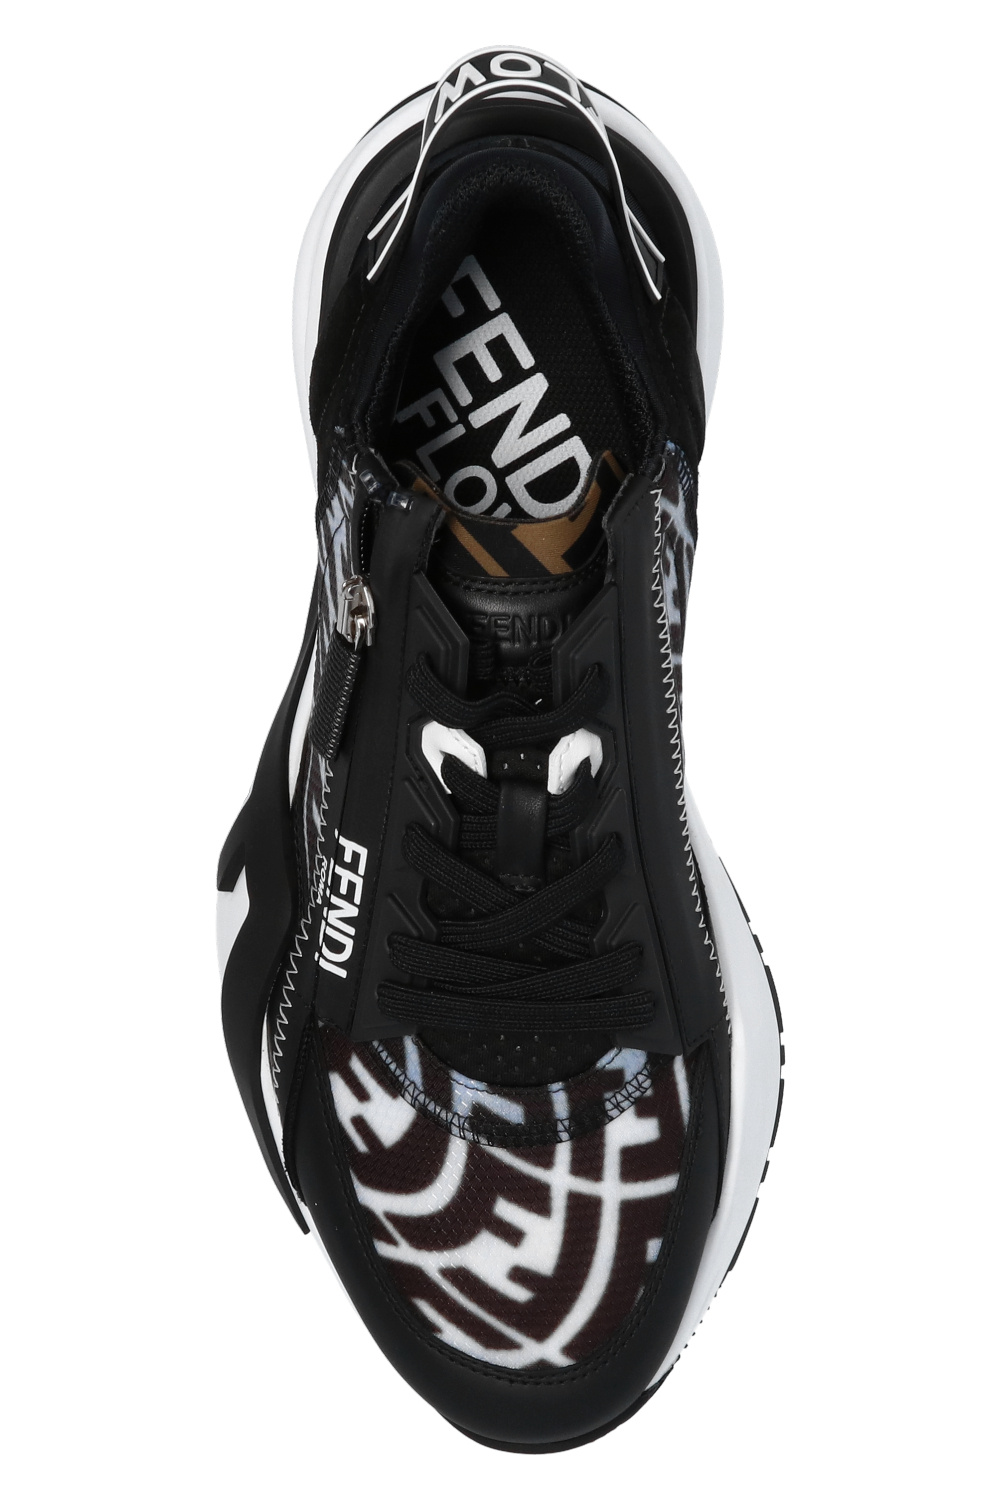 Fendi Sneakers with logo